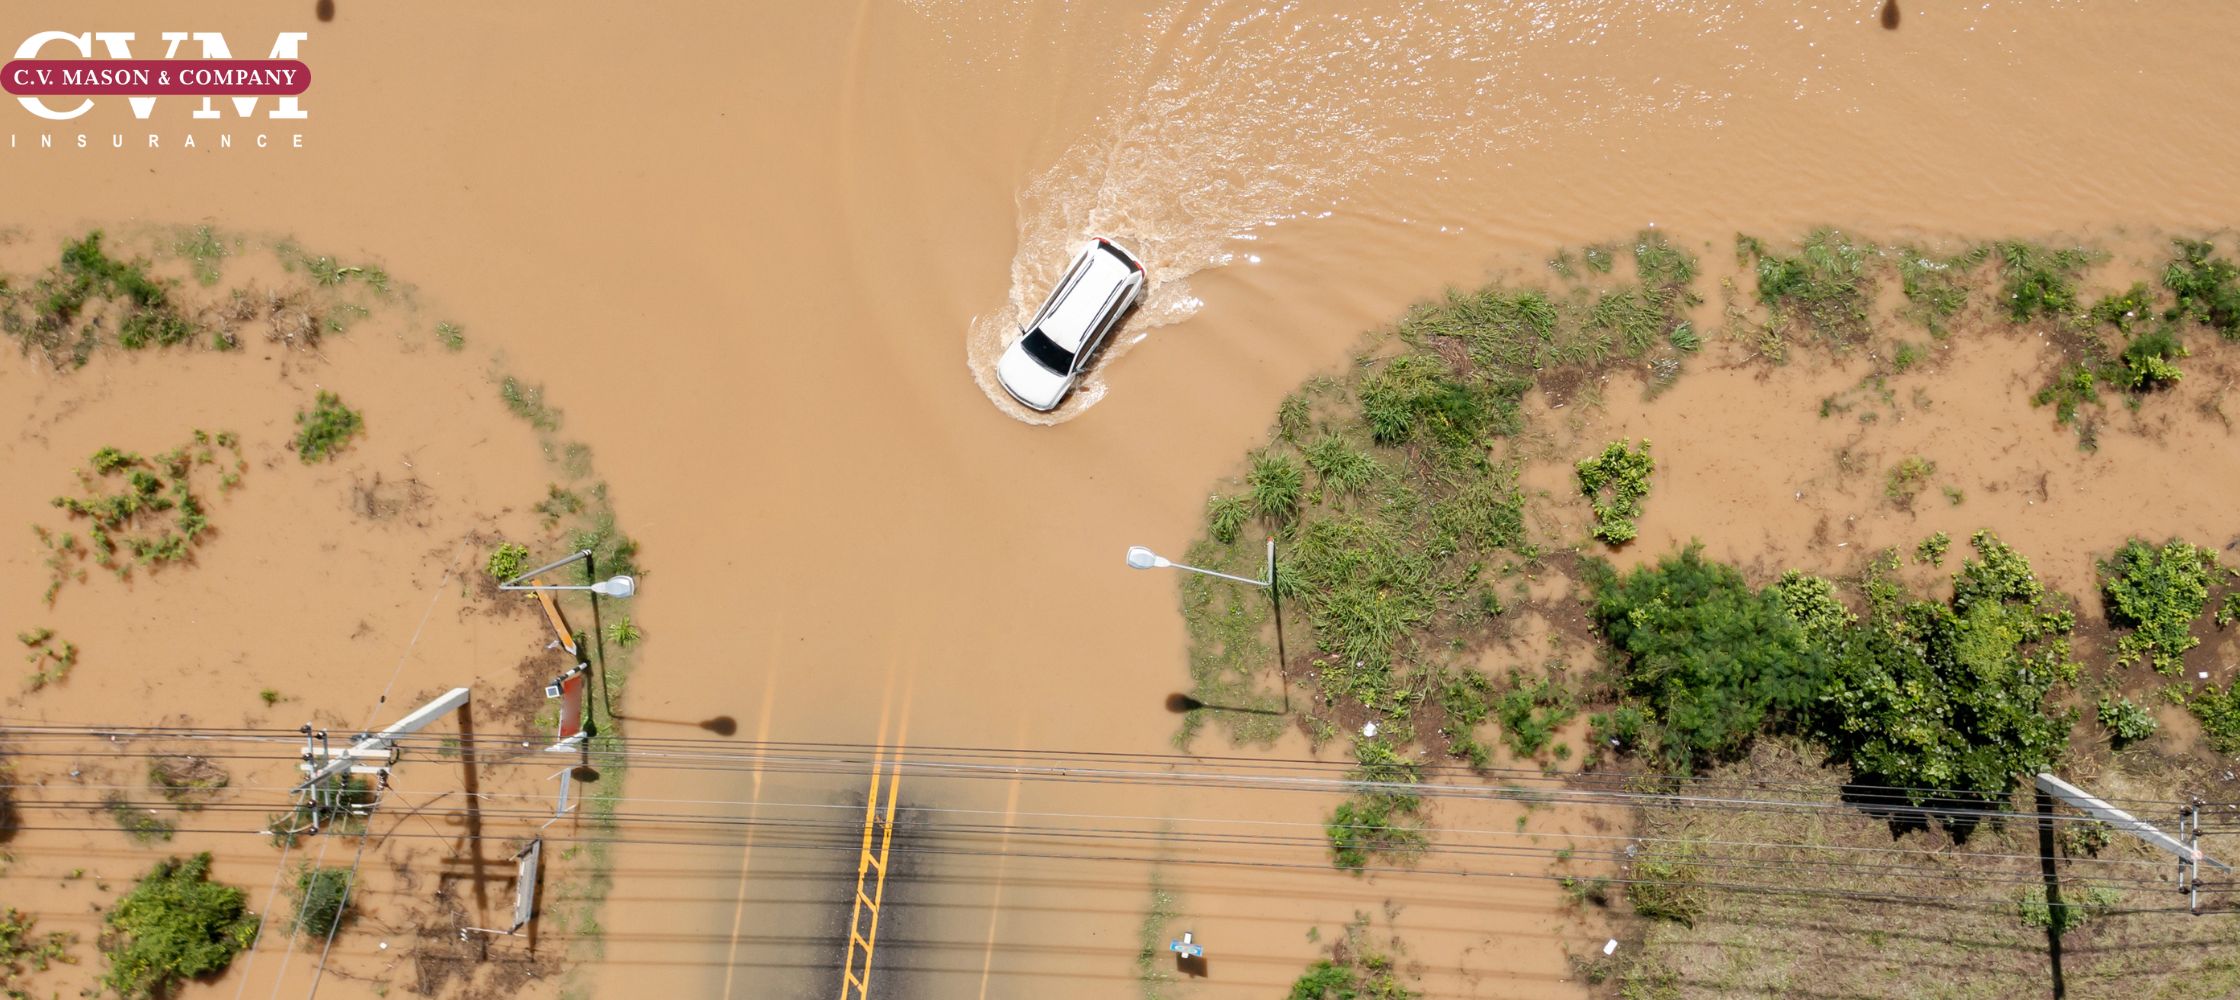 flood damage and car insurance